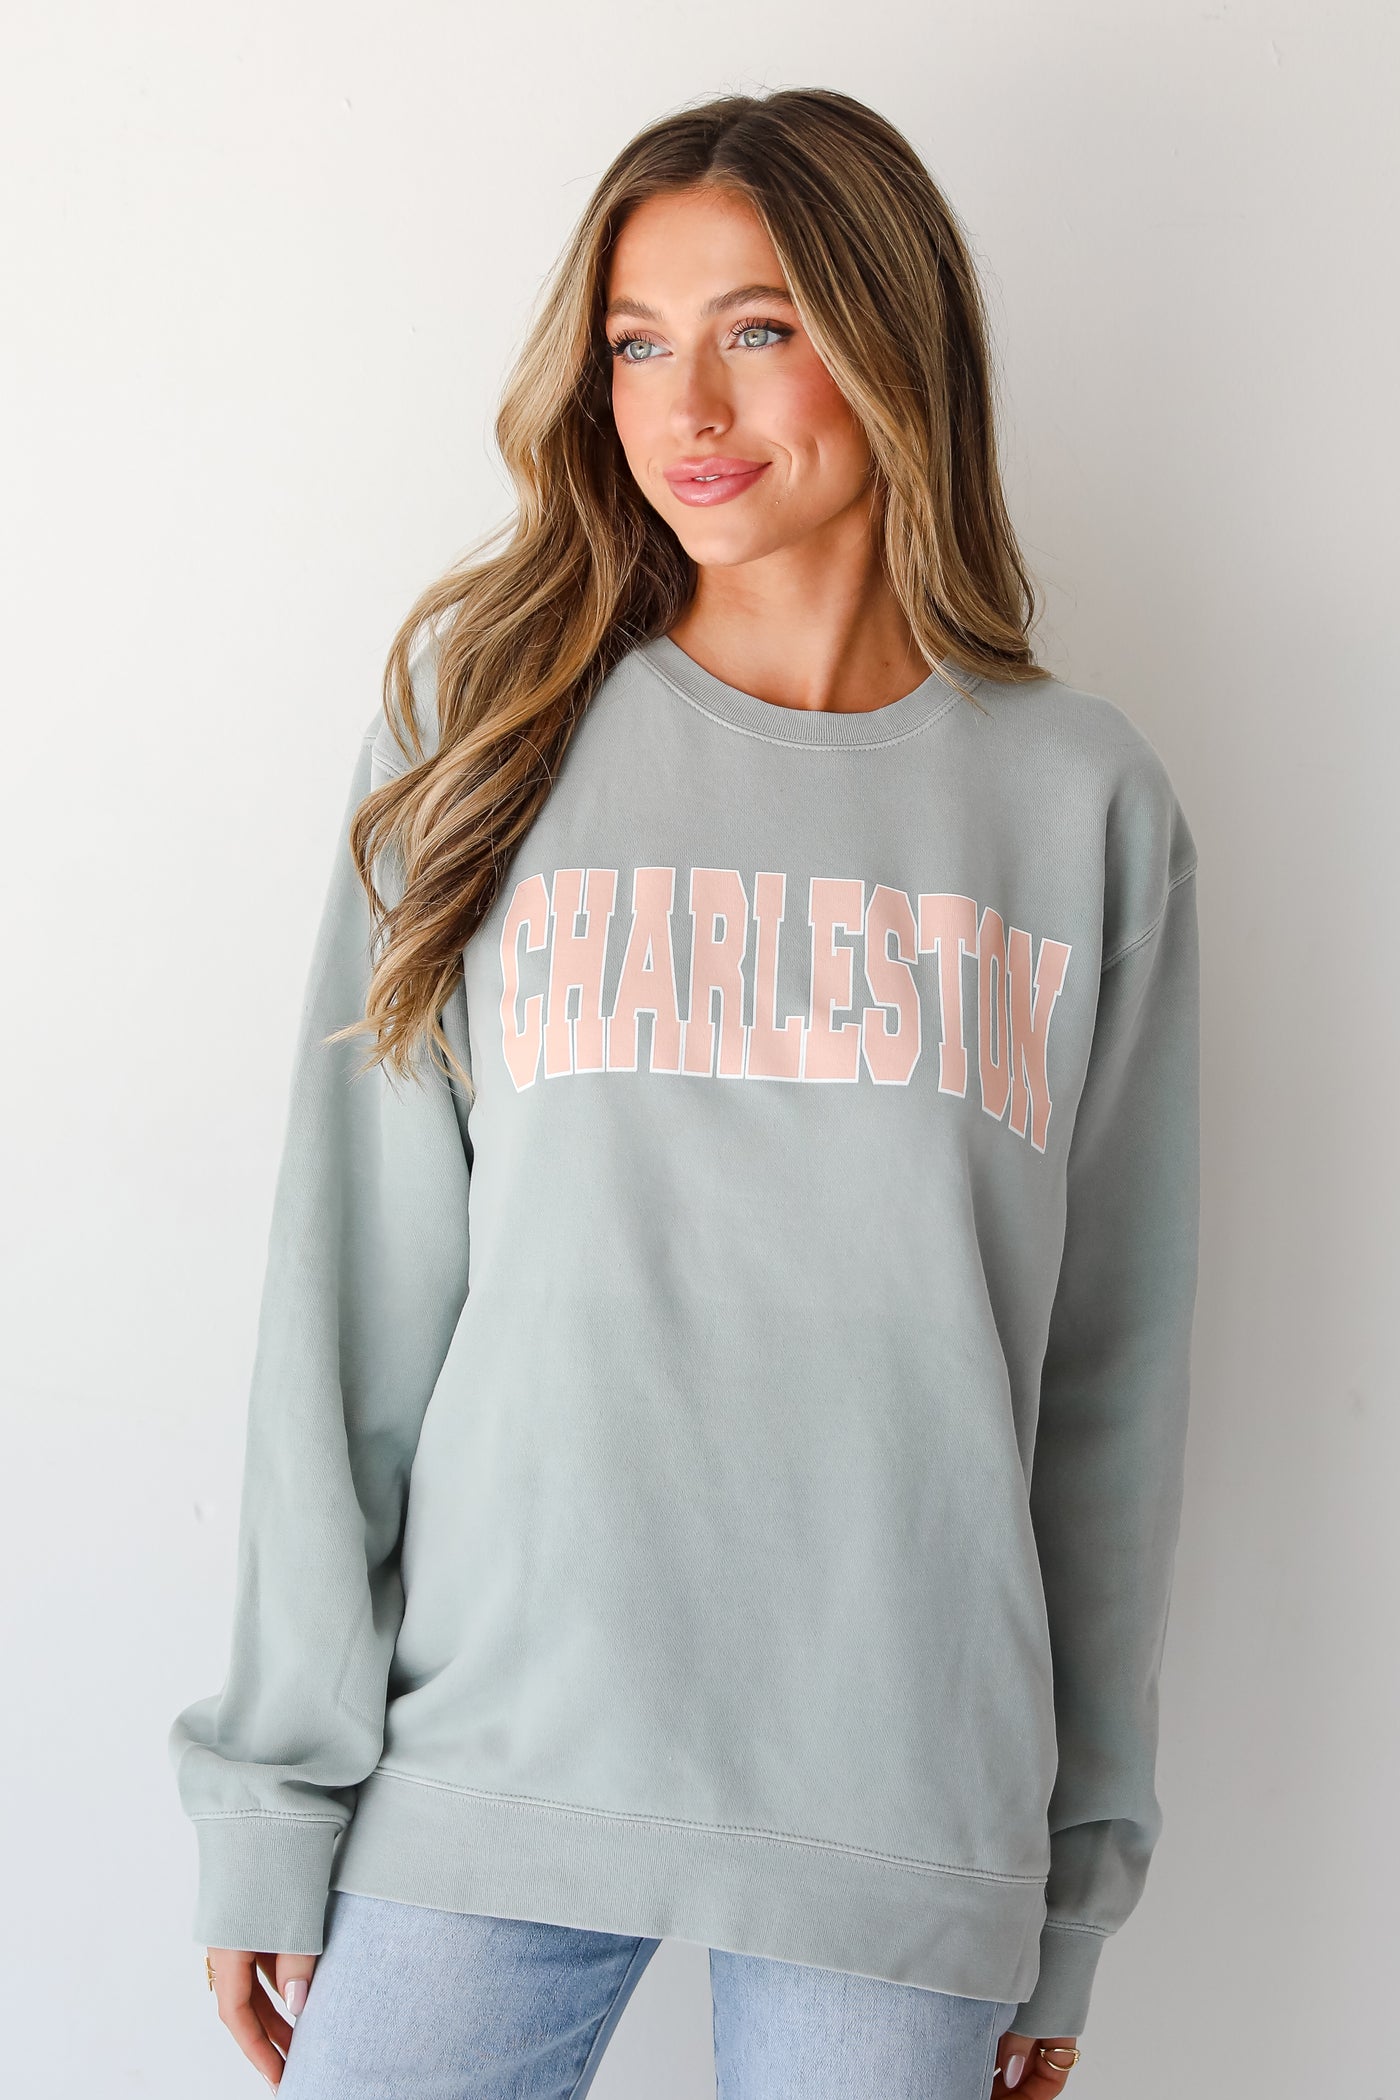 Sage Charleston Pullover. Charleston Sweatshirt. Graphic Sweatshirt. Oversized Sweatshirt Womens.